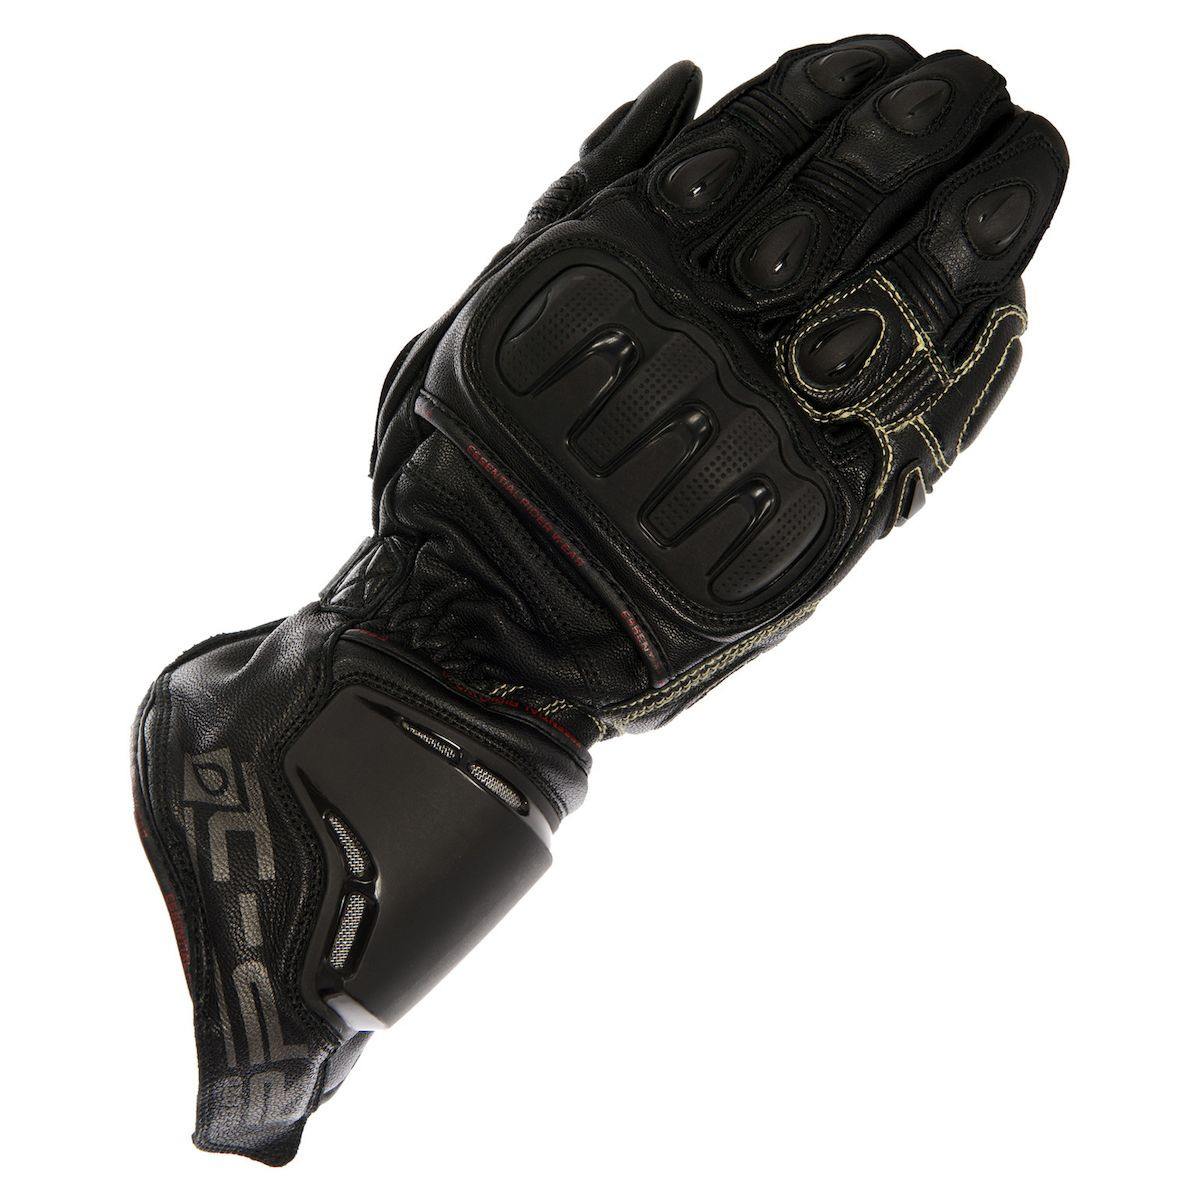 Oxford Unisex-Adult RP-1 Waterproof Leather Race Gloves Stealth Black, Medium 